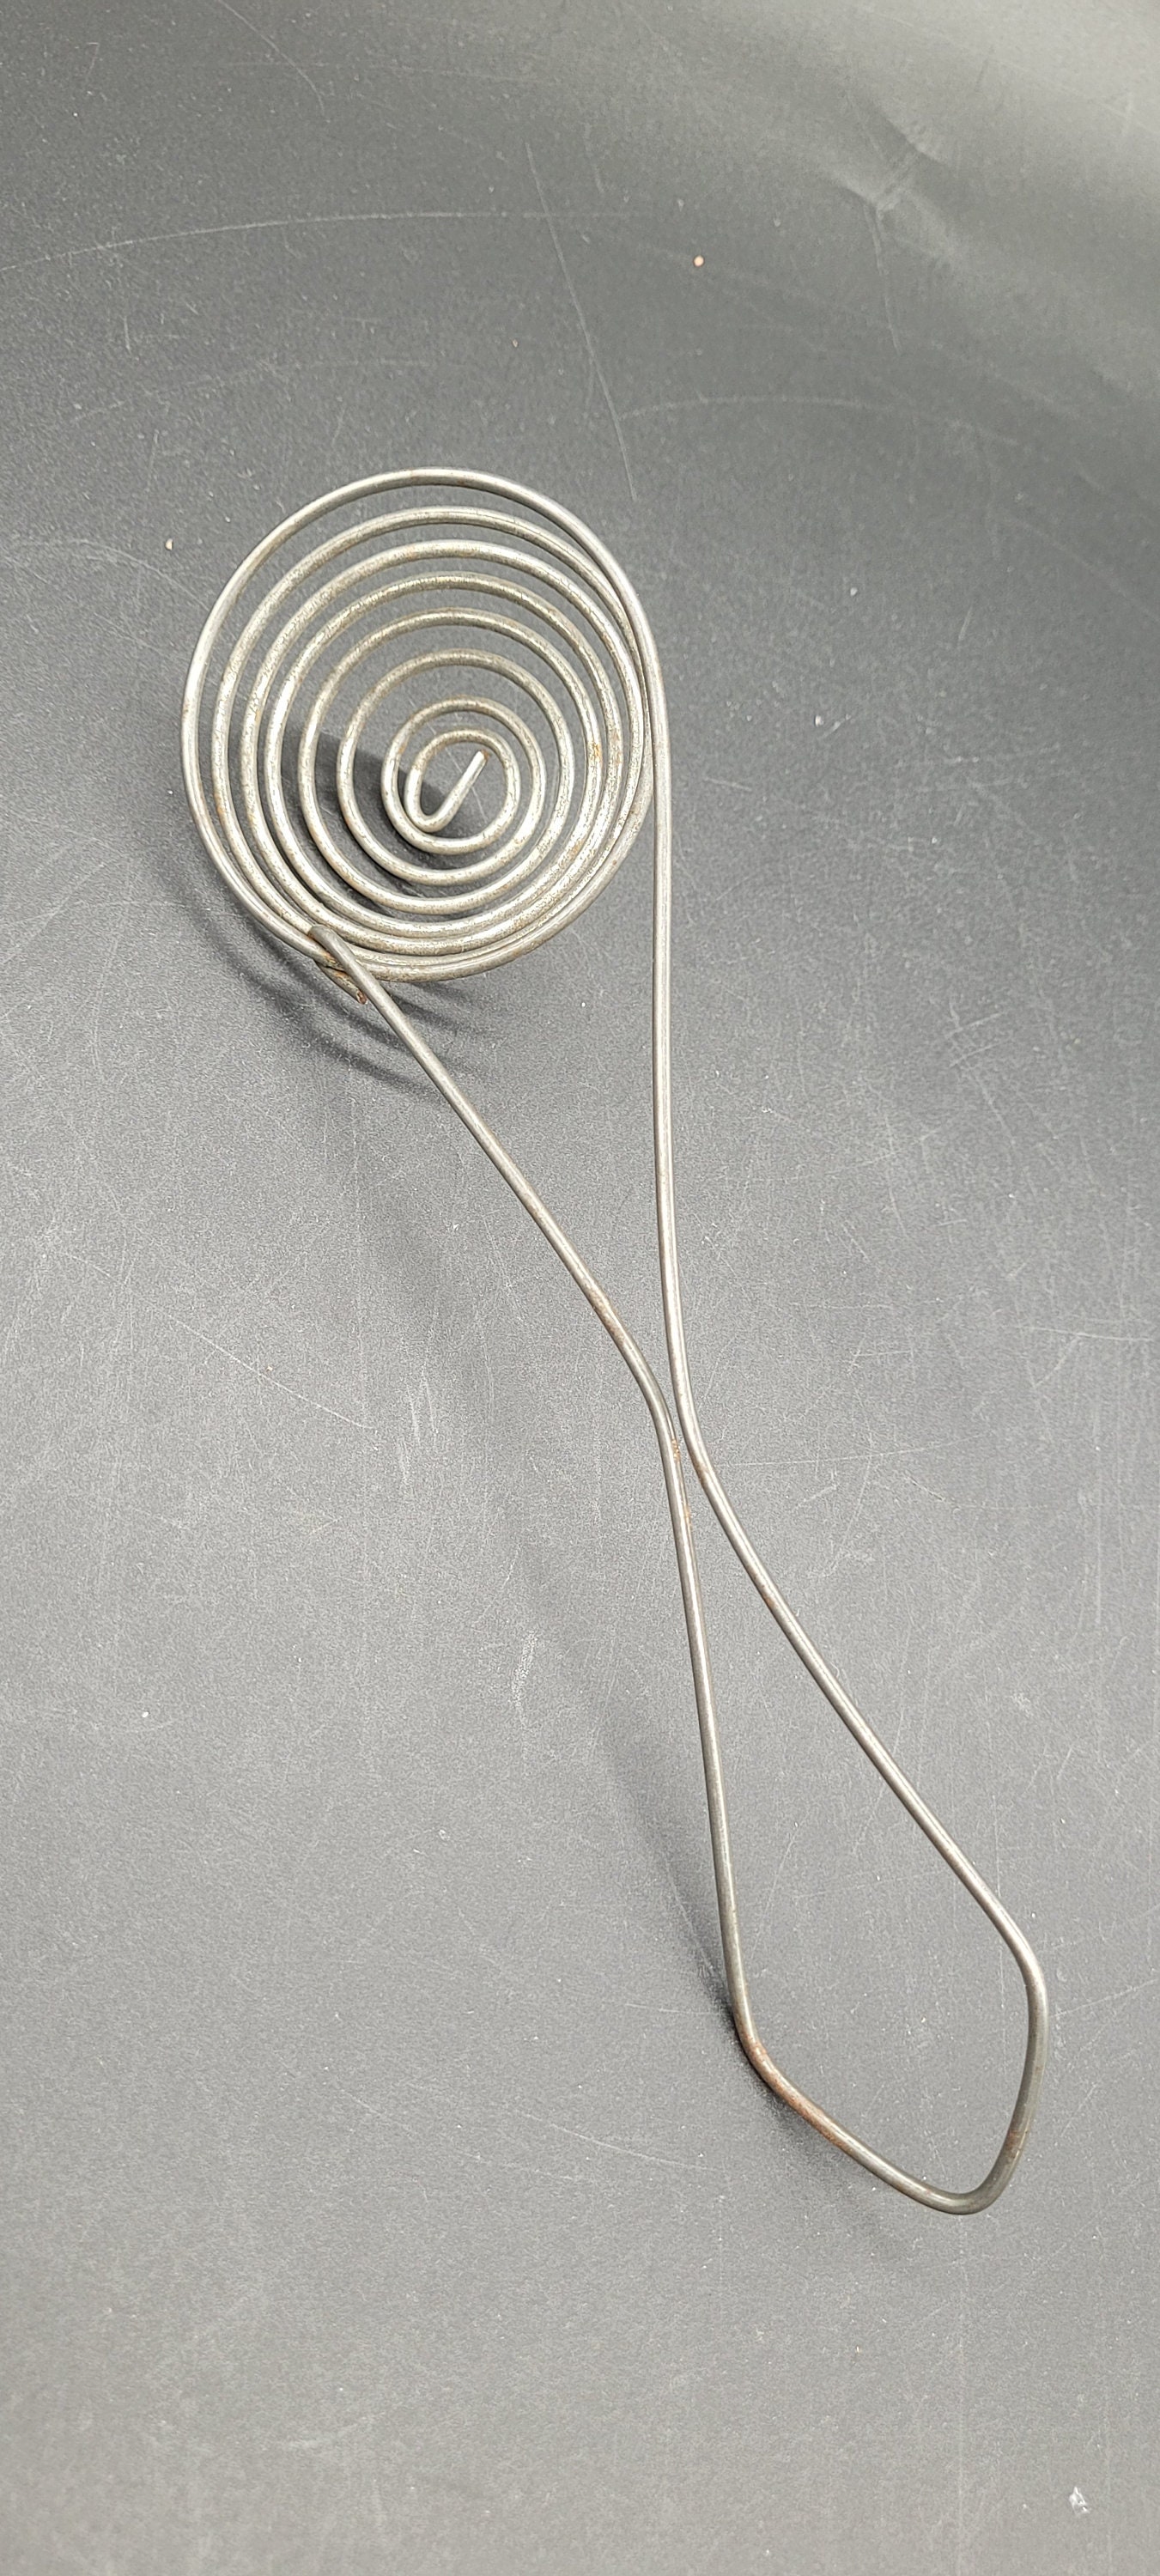 Vintage Utensil Spiral Wire Metal Egg Separator Whisk Strainer 9